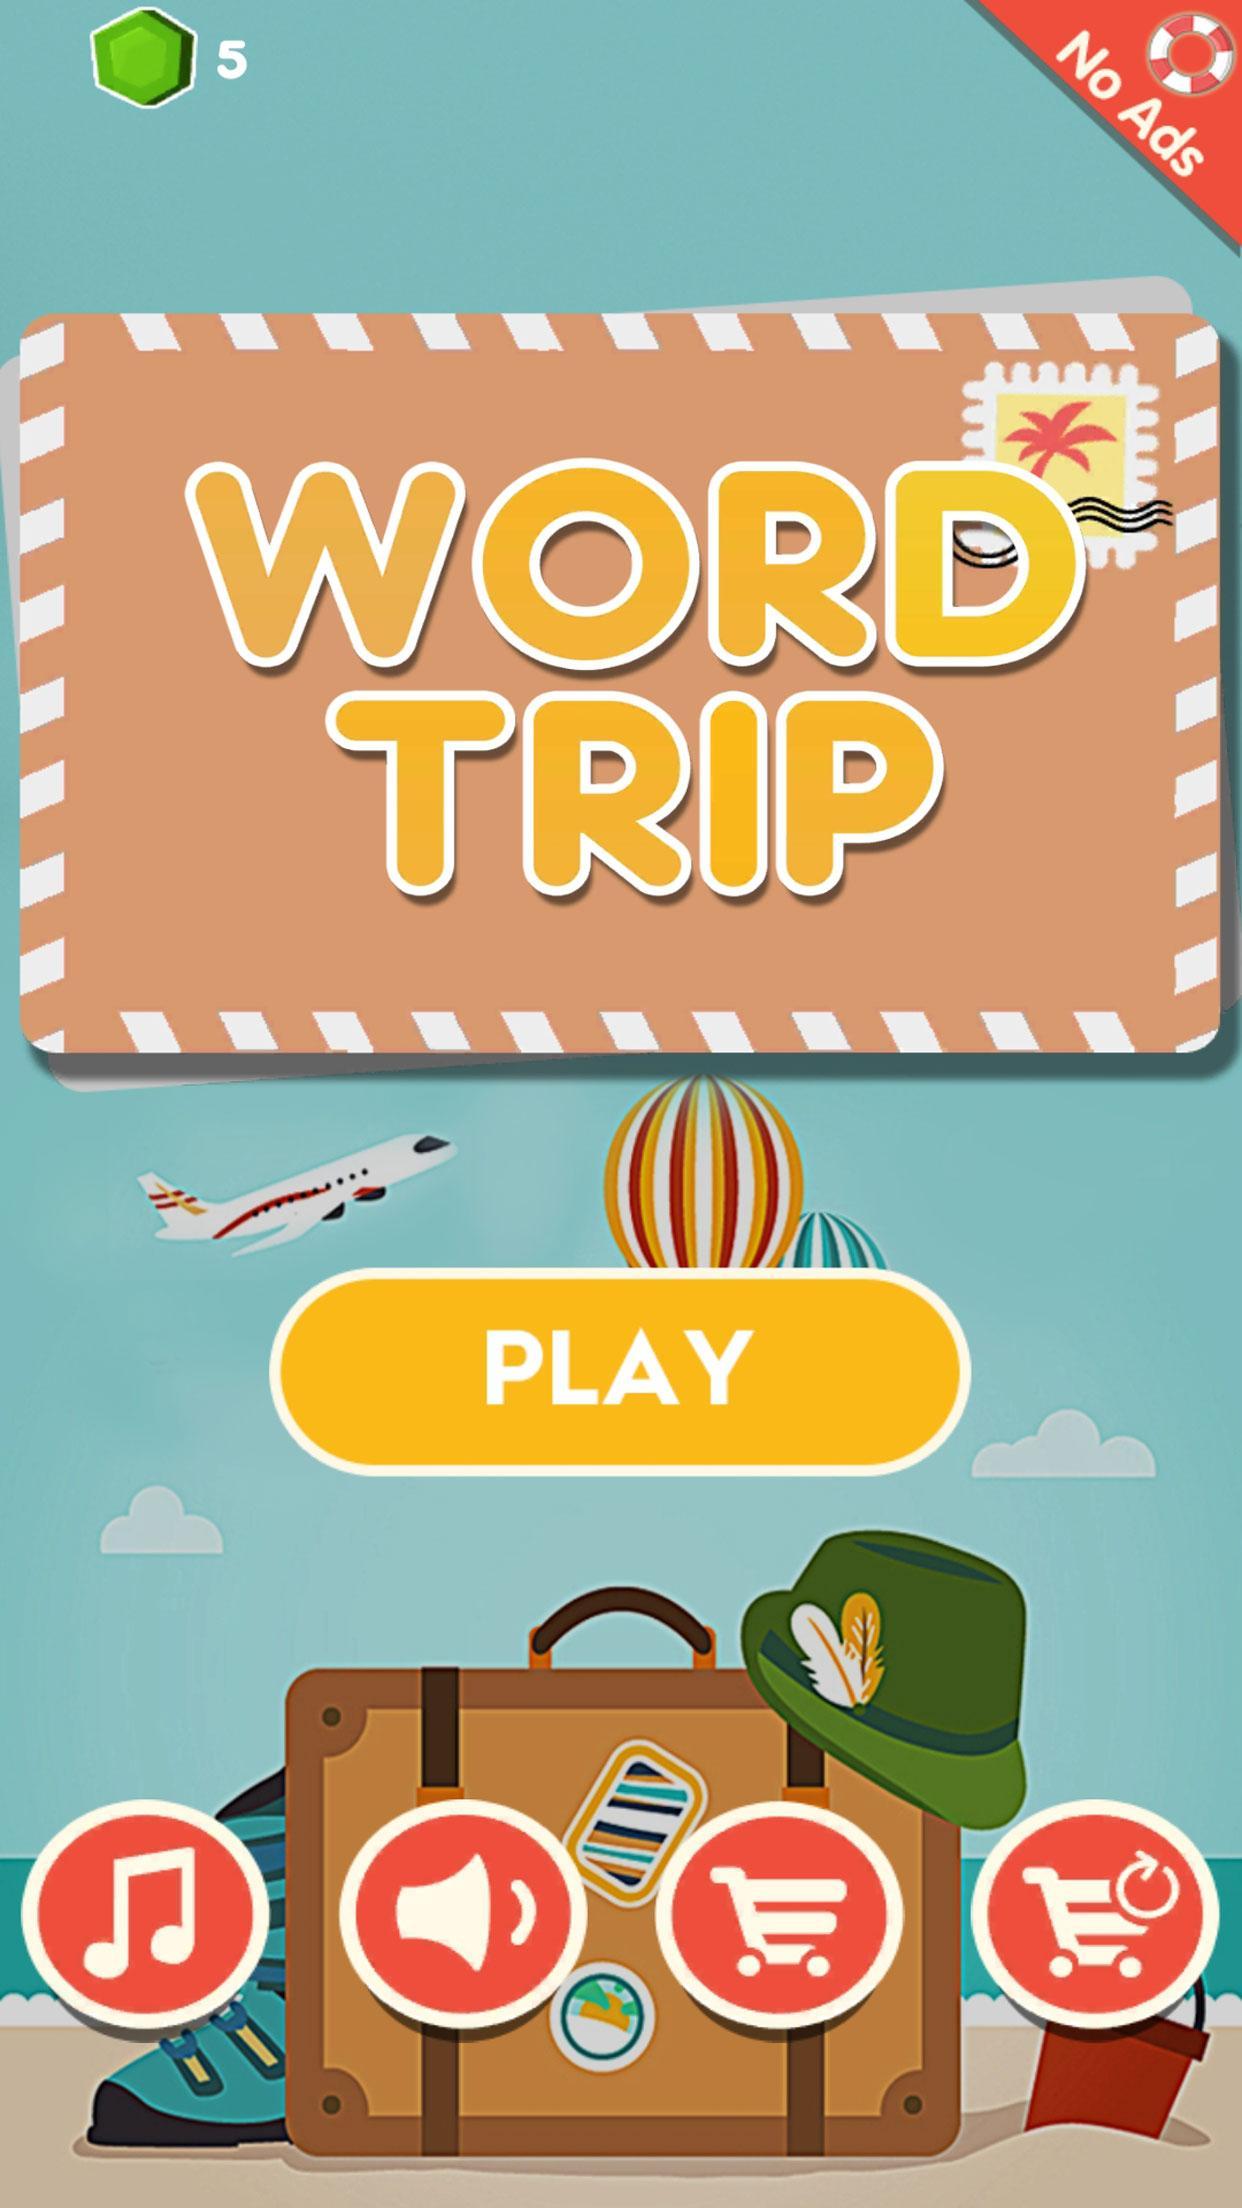 Word trip ответы на все уровни. Ворд трип игра в слова. Word trip игра.